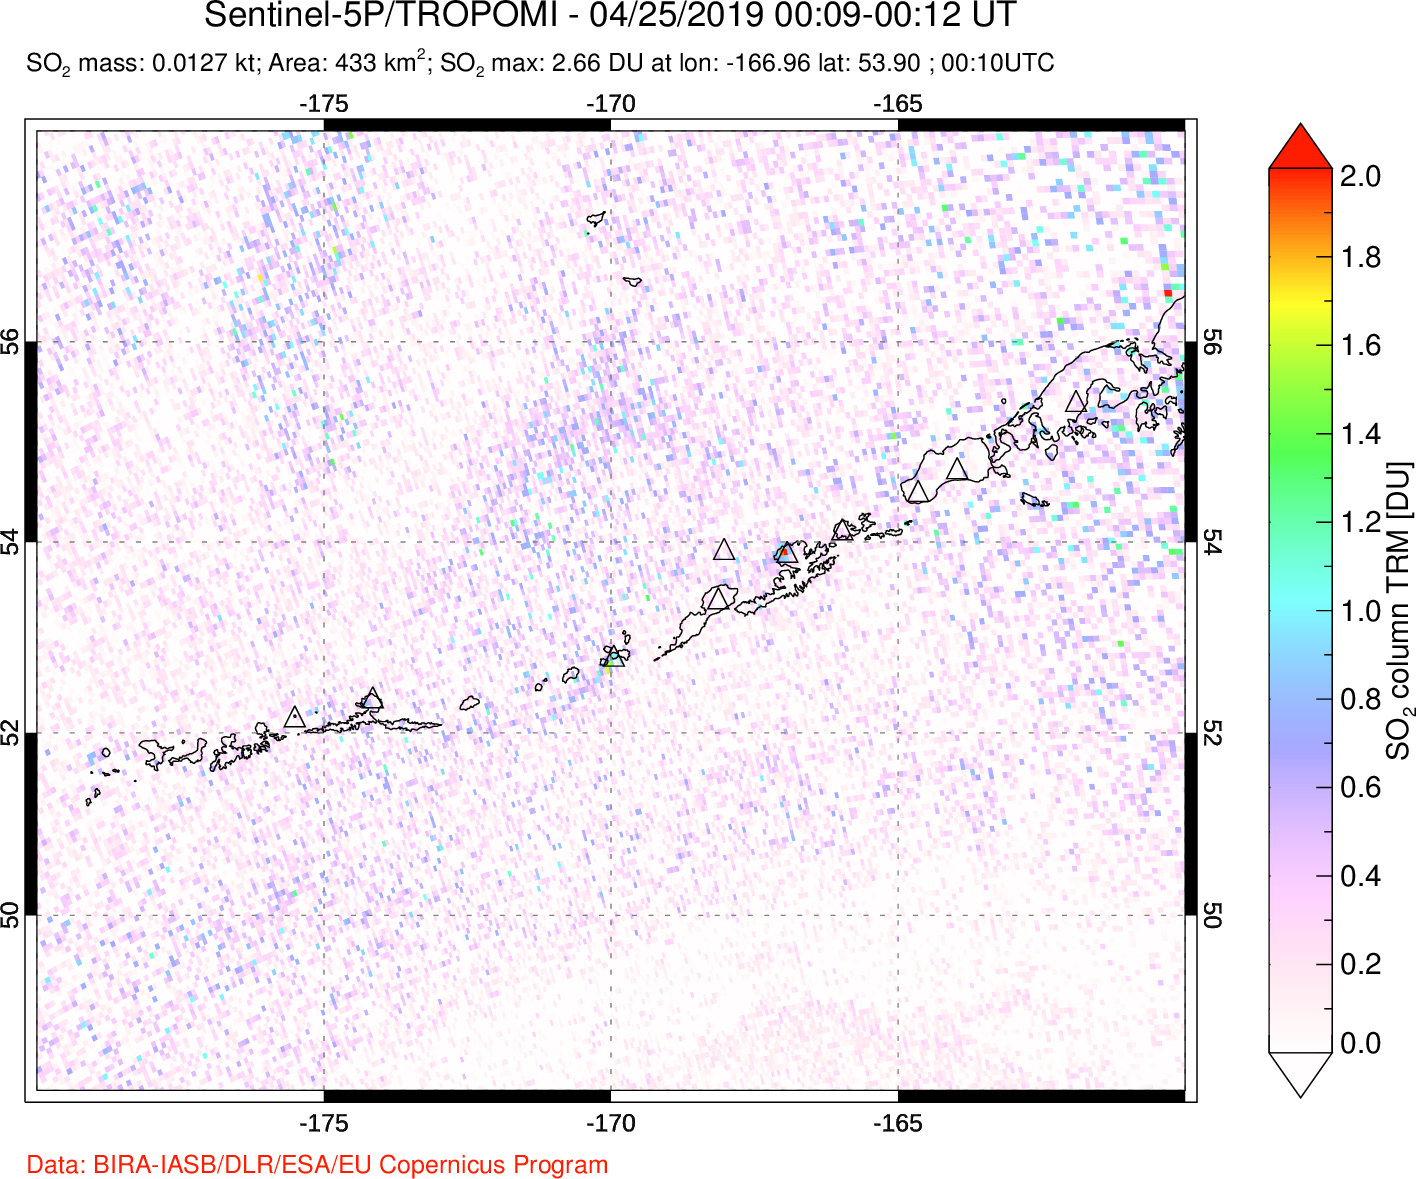 A sulfur dioxide image over Aleutian Islands, Alaska, USA on Apr 25, 2019.